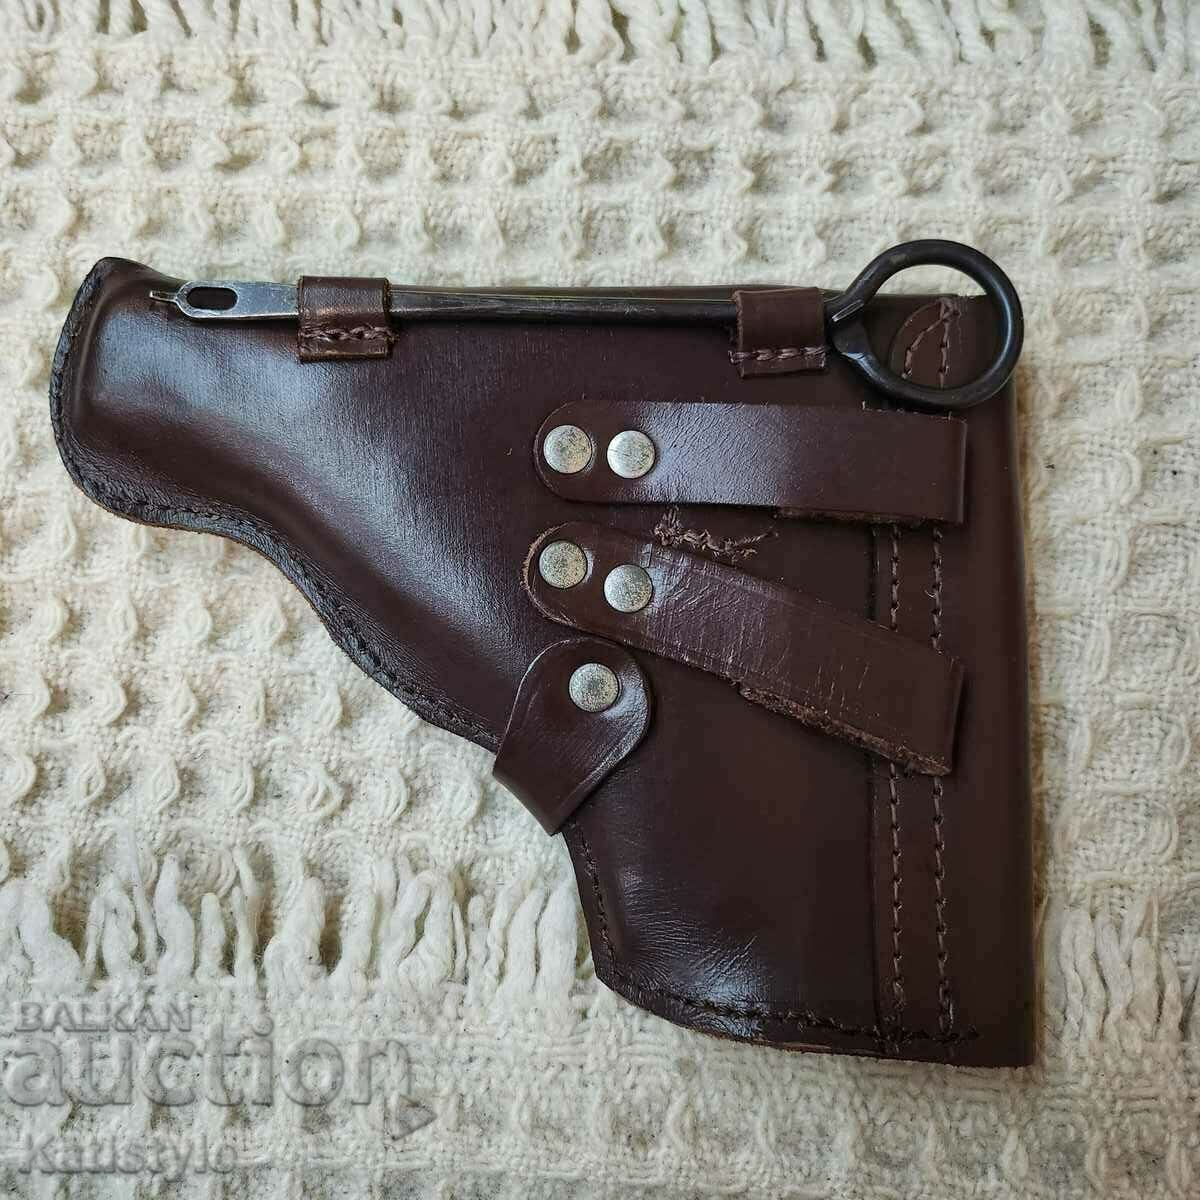 Makarov pistol holsters